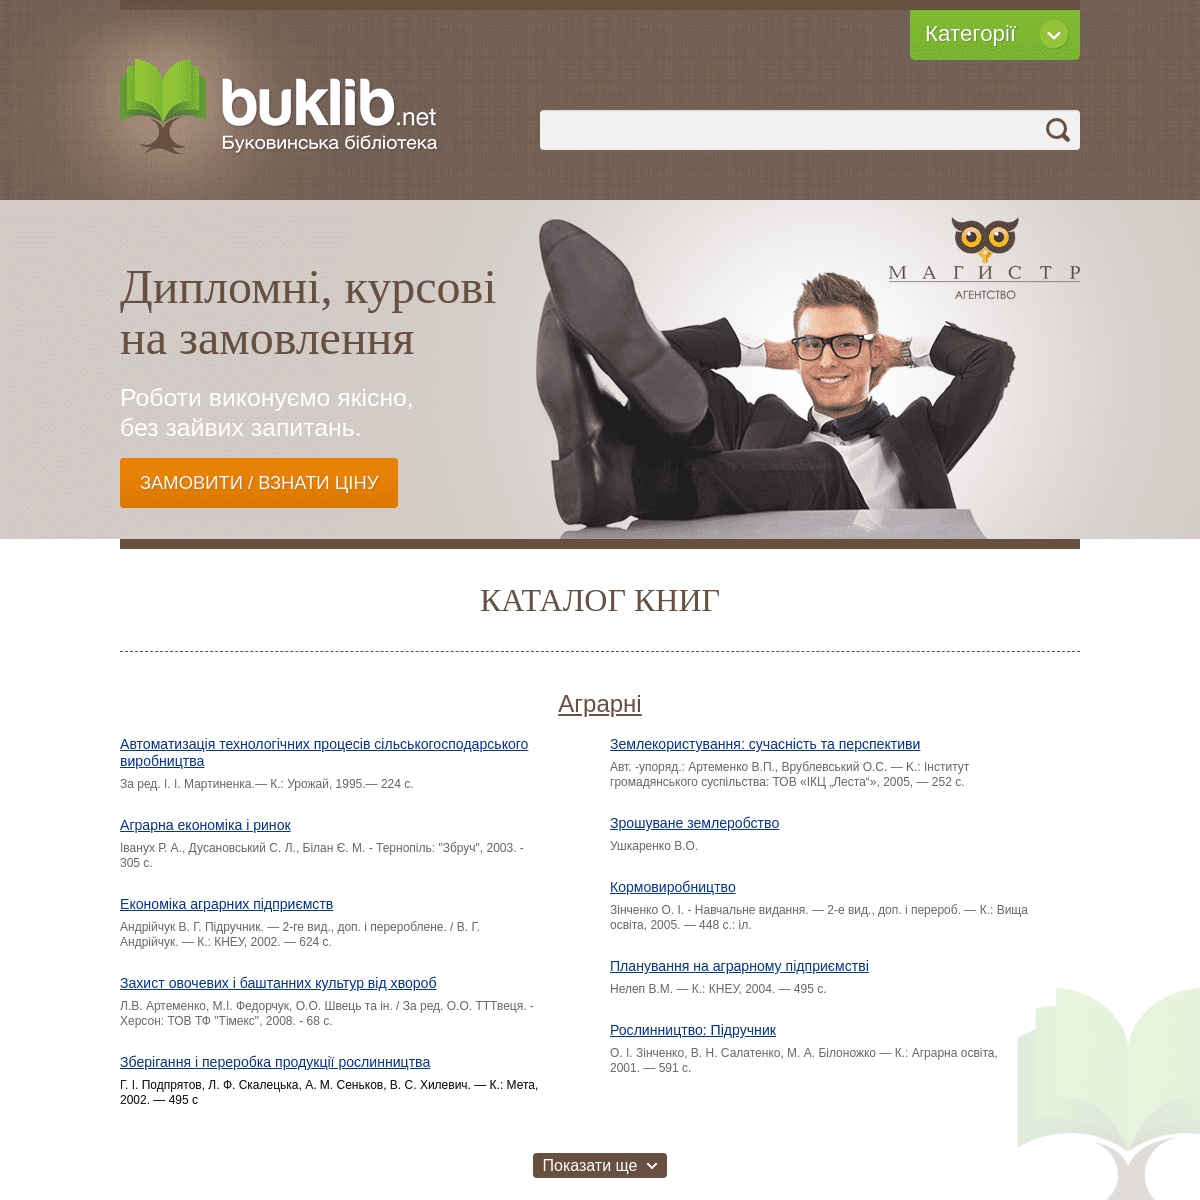 A complete backup of buklib.net